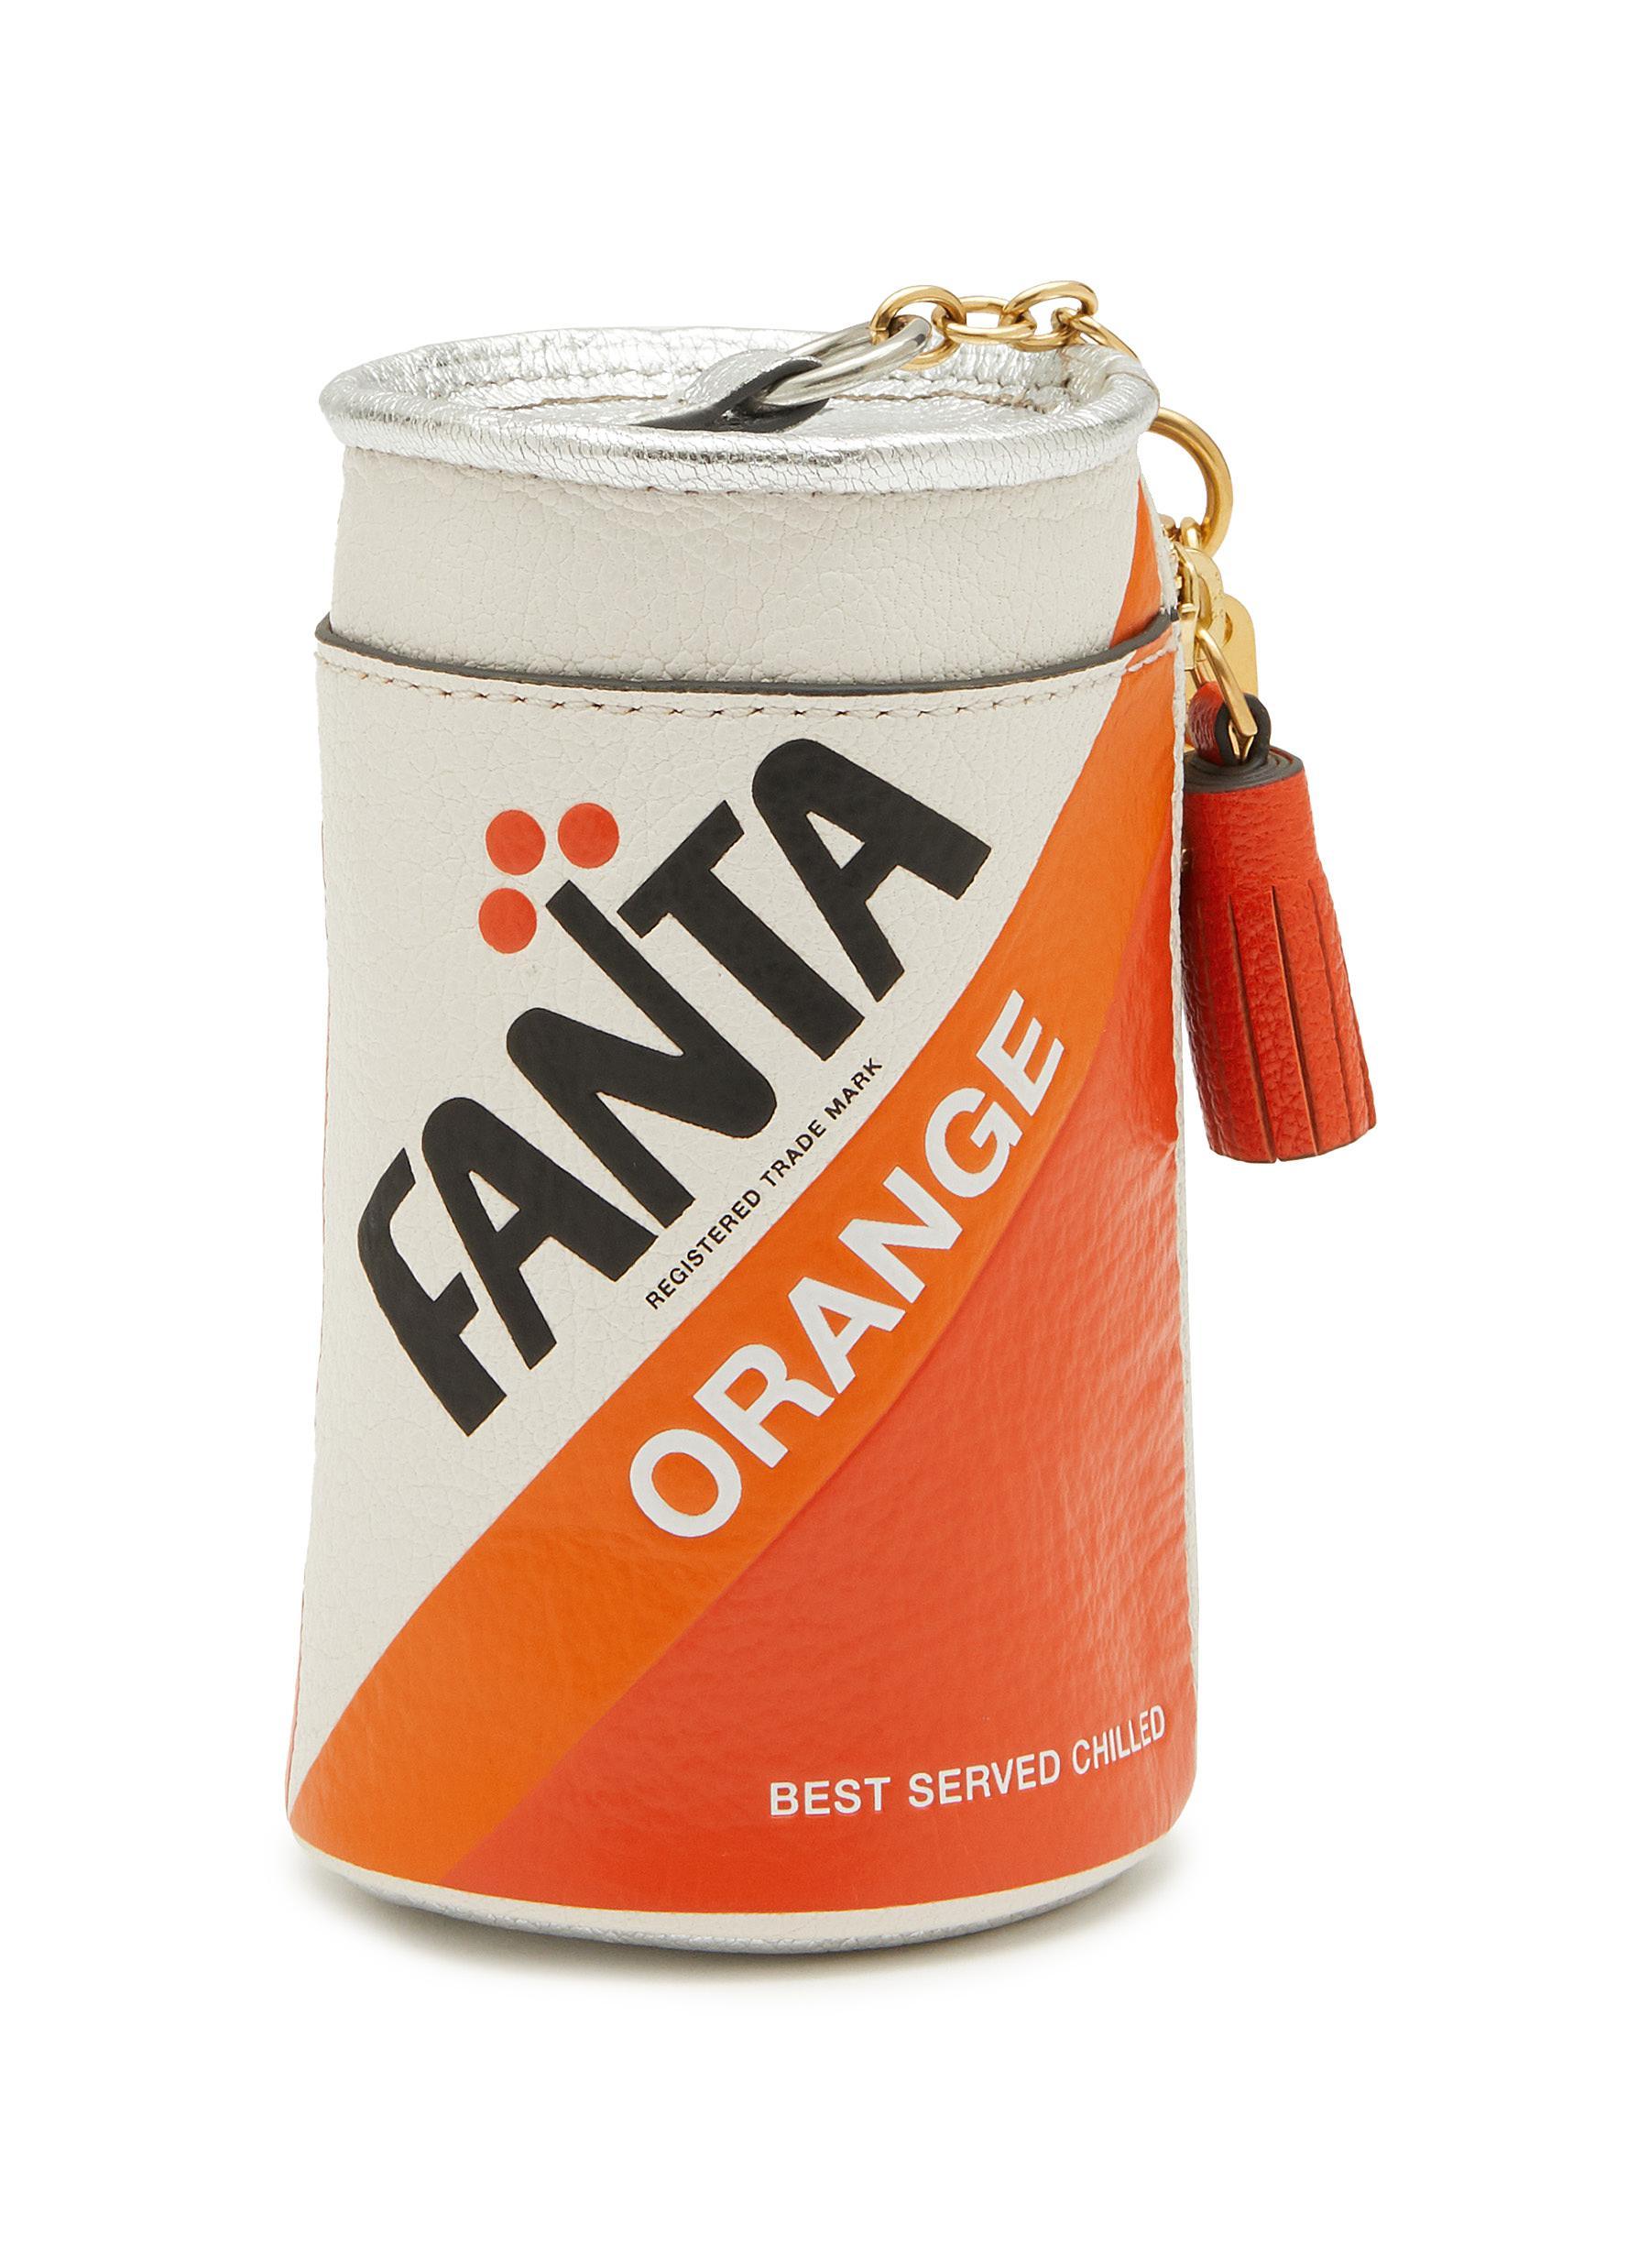 Anya Hindmarch 'fanta' Leather Coin Purse in Orange